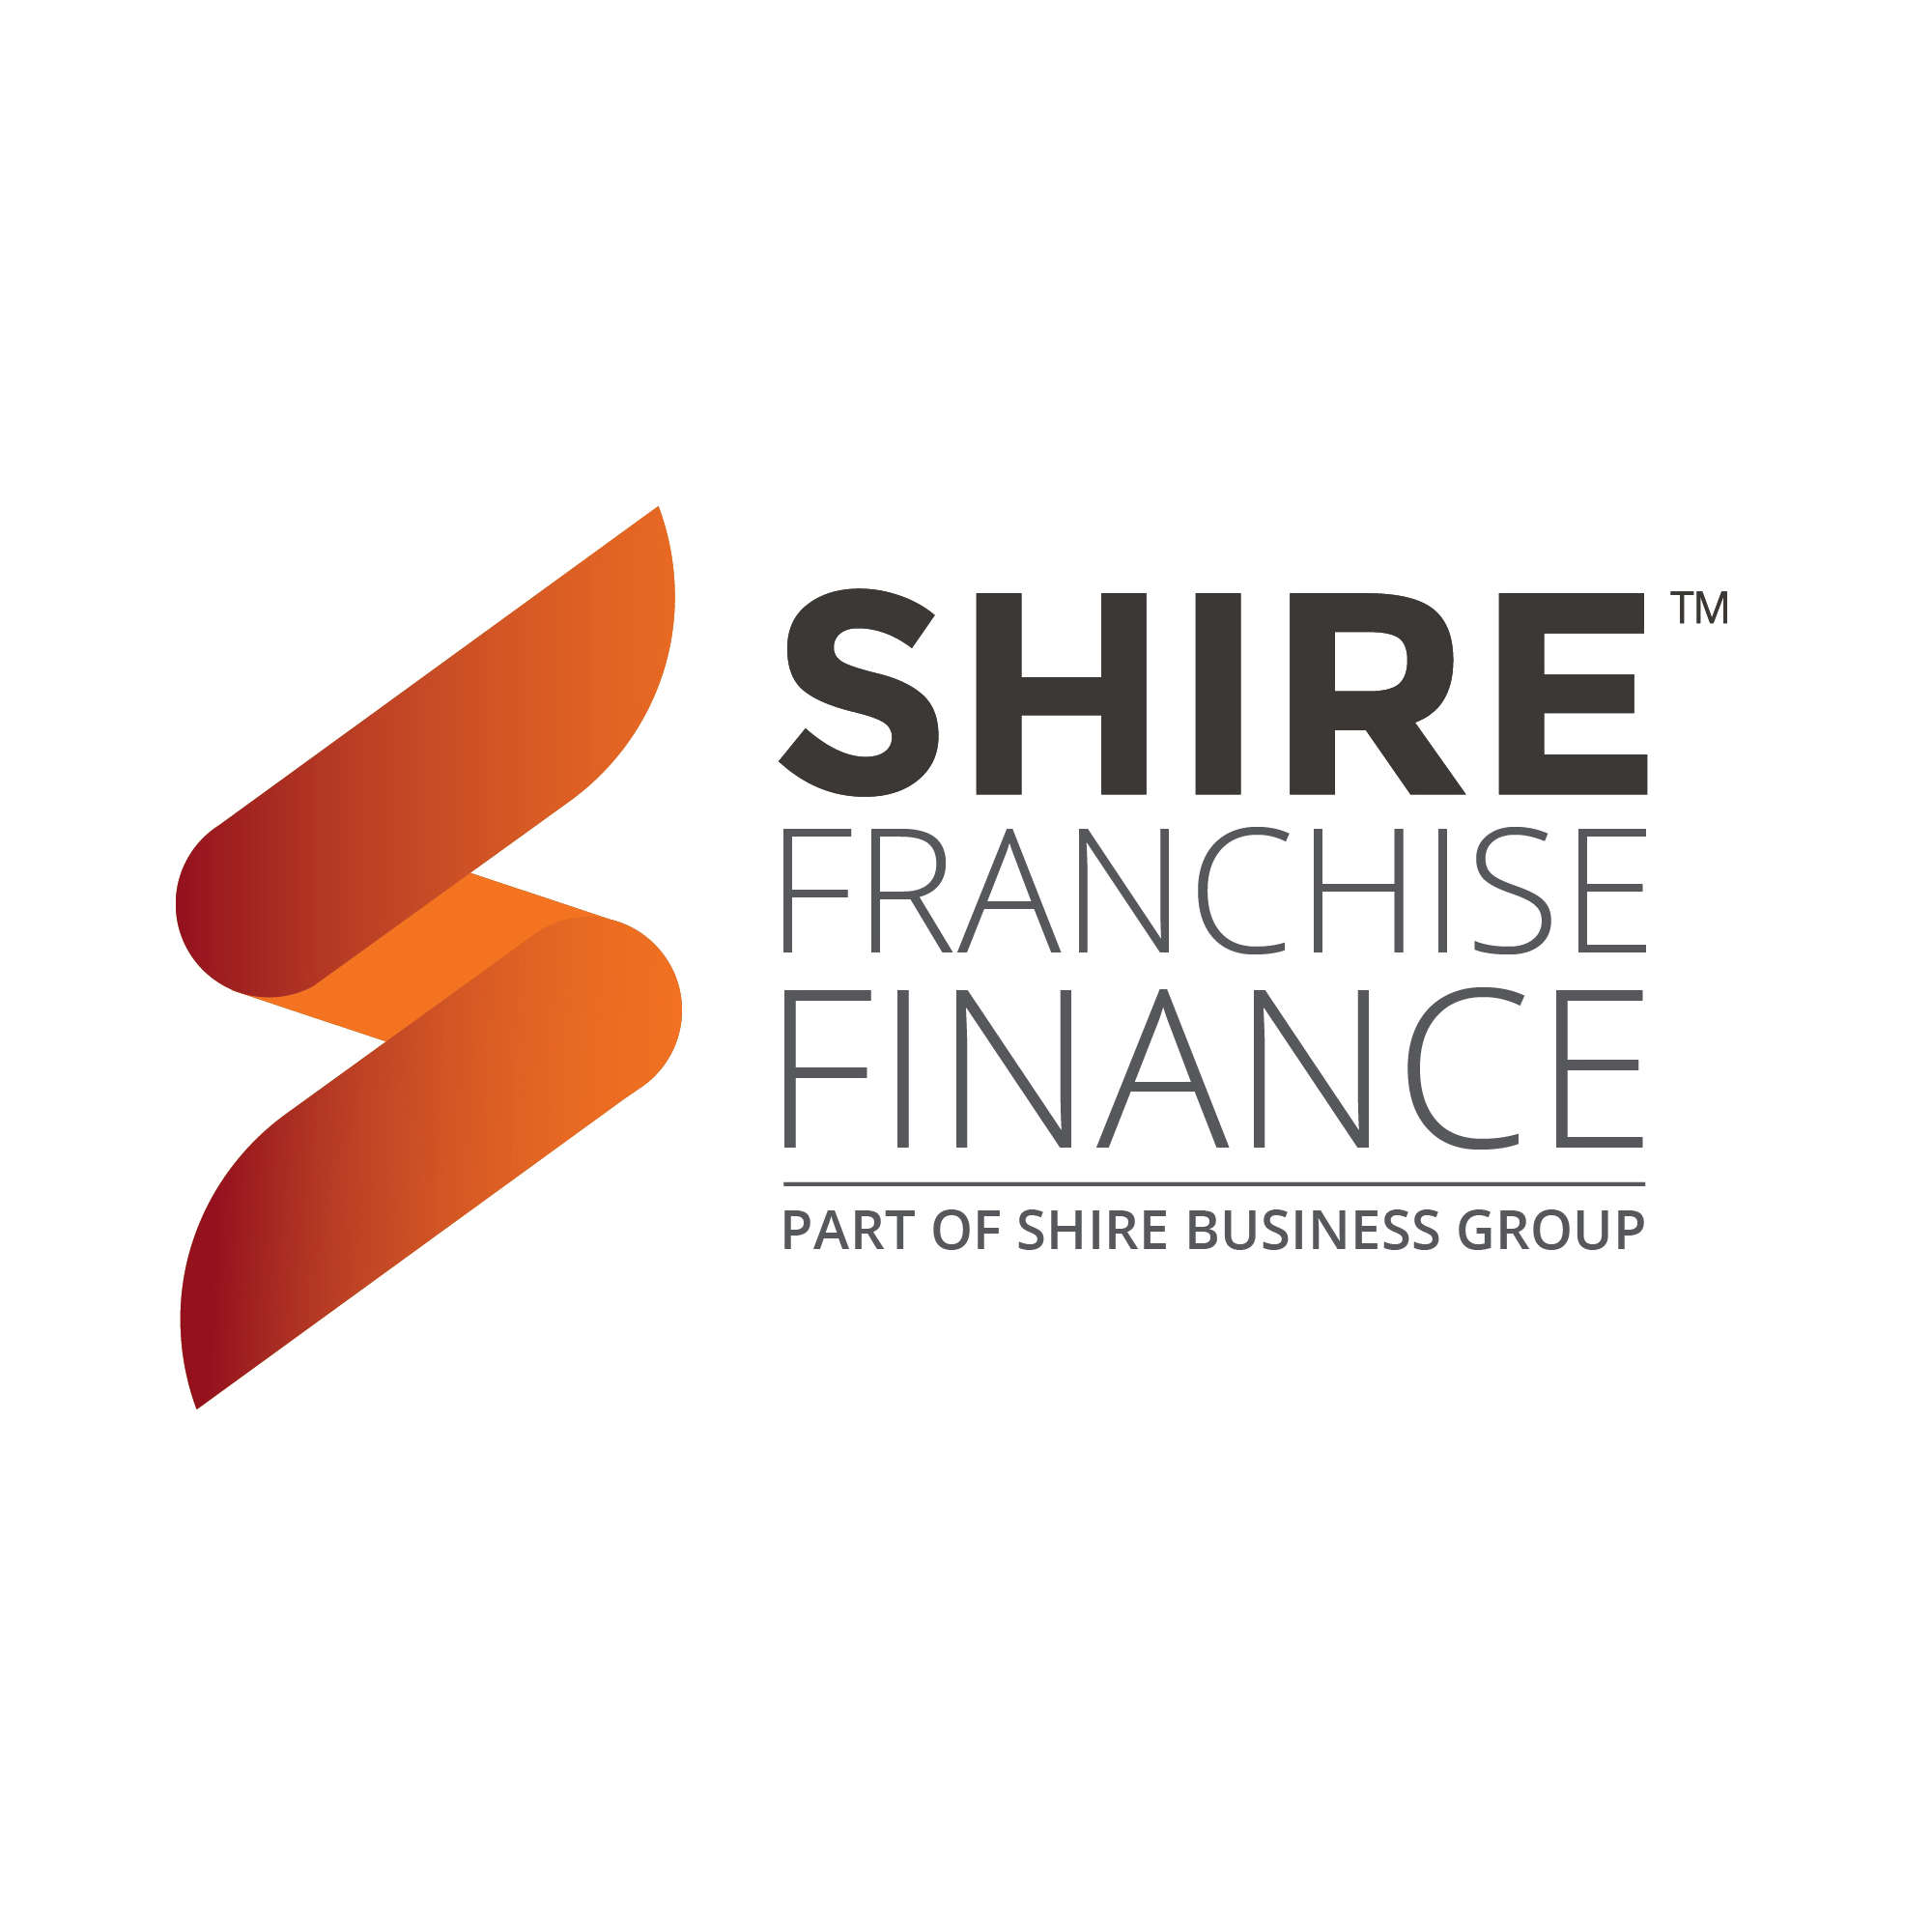 Shire Franchise Finance